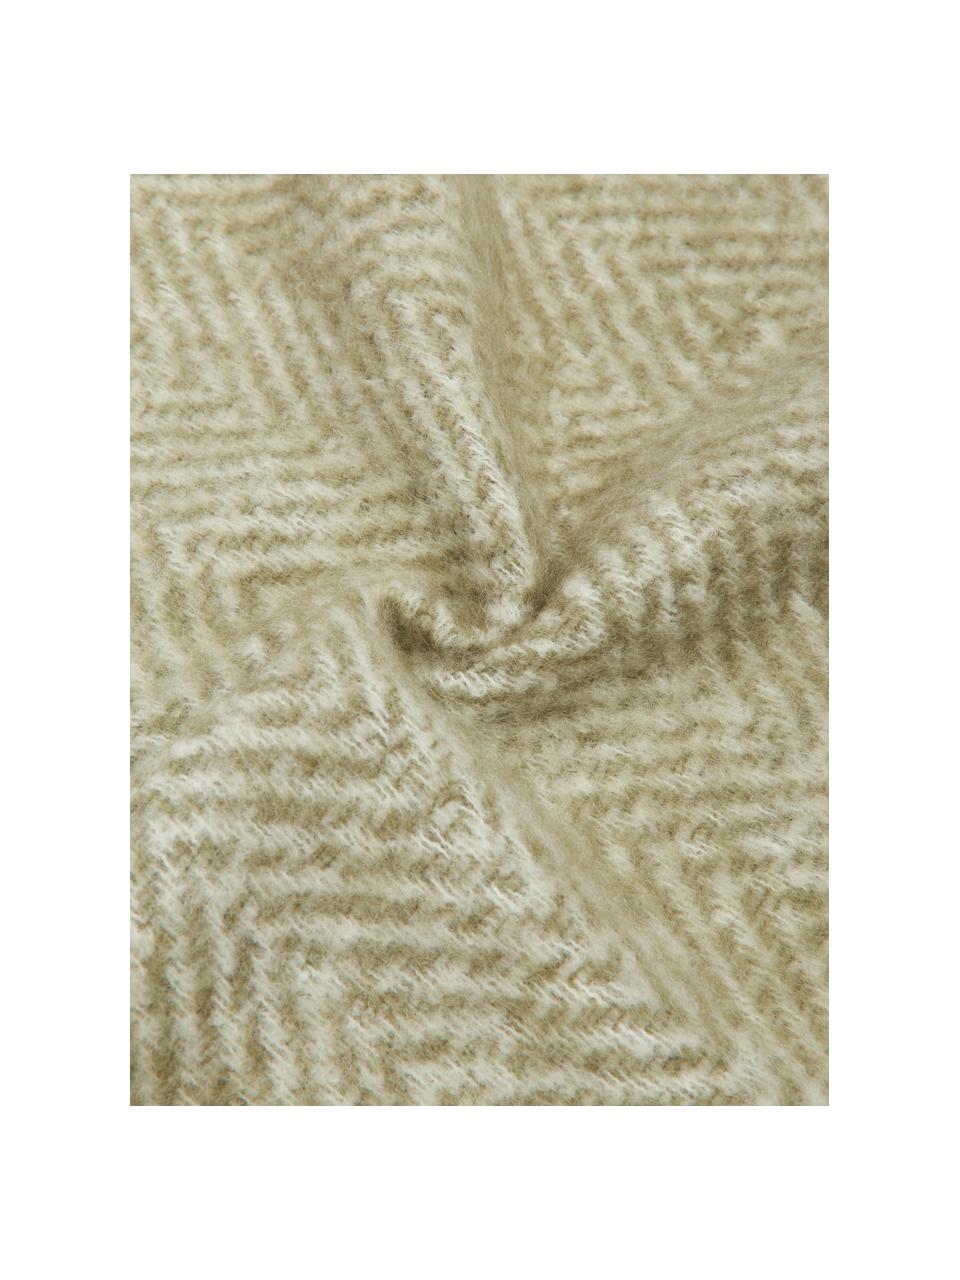 Woll-Decke Mathea mit Fransen in Grün, 60 % Wolle, 25 % Acryl, 15 % Nylon, Braun, Cremefarben, L 170 x B 130 cm